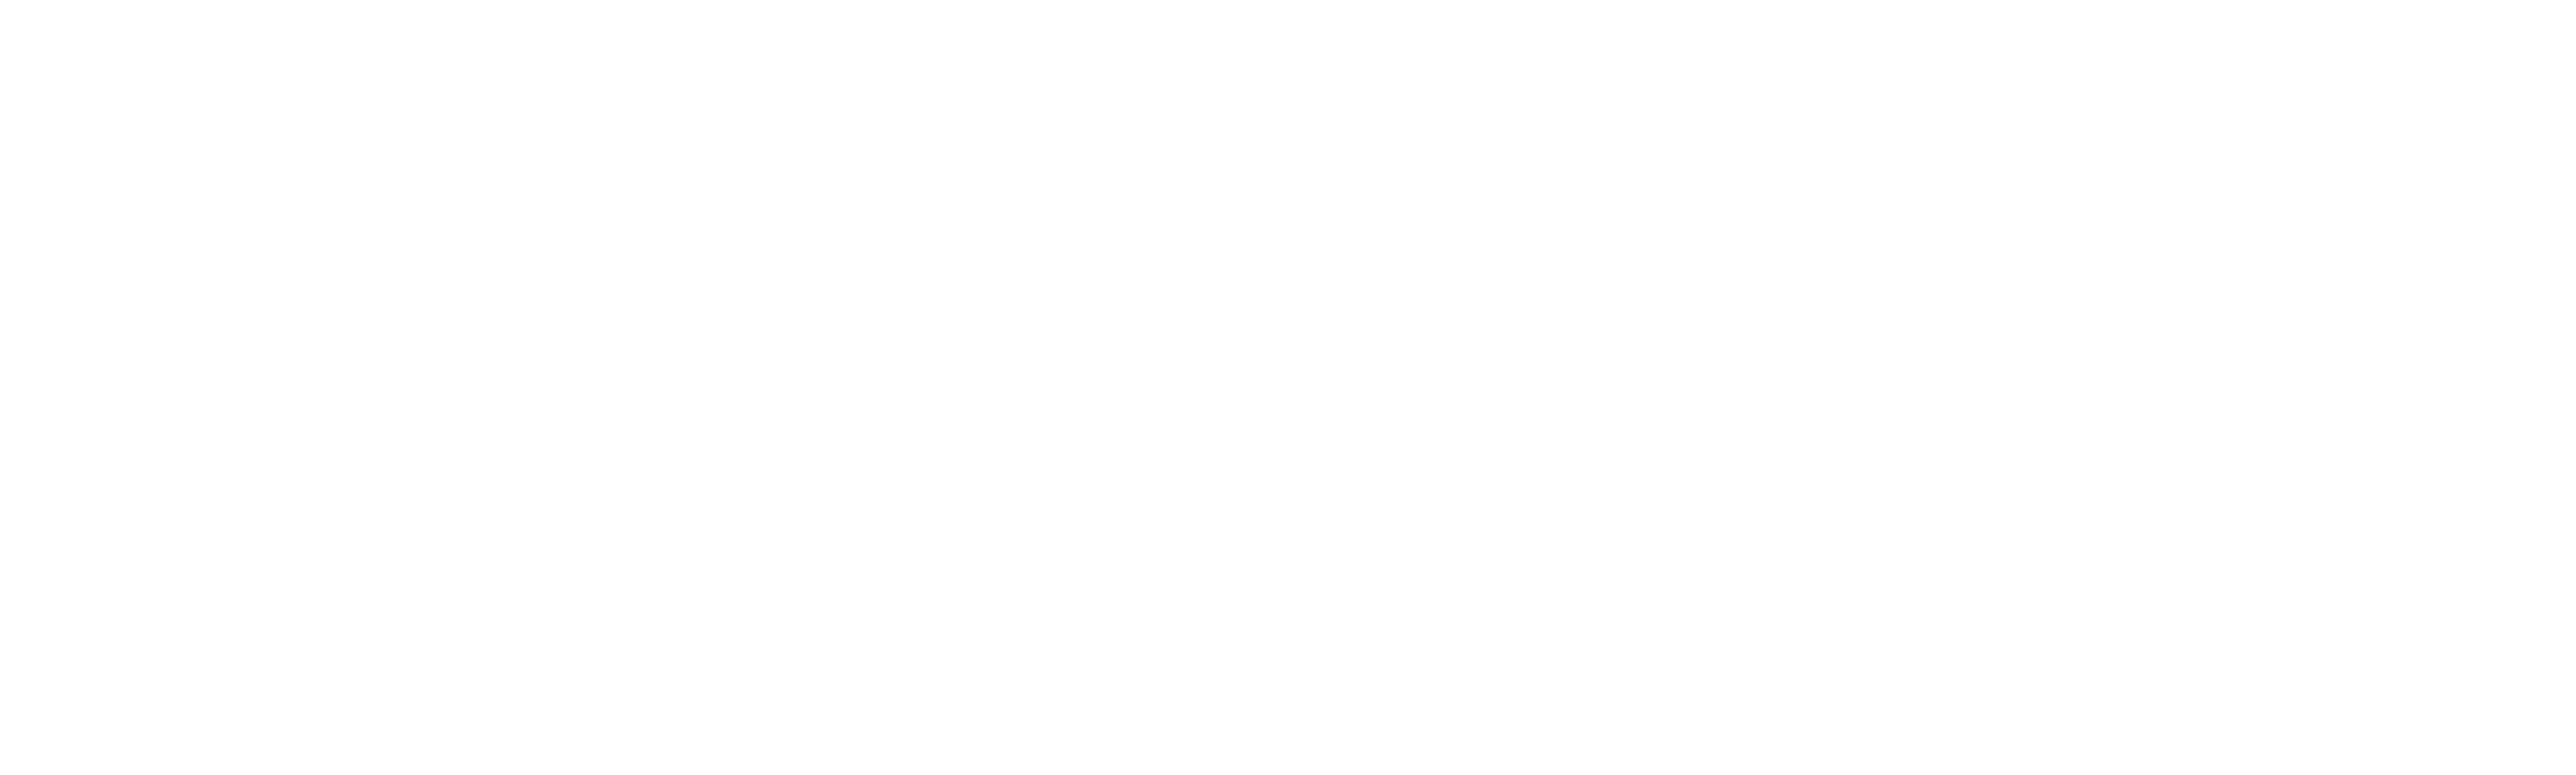 Prime Video: Steven Universo: Futuro - Season 1